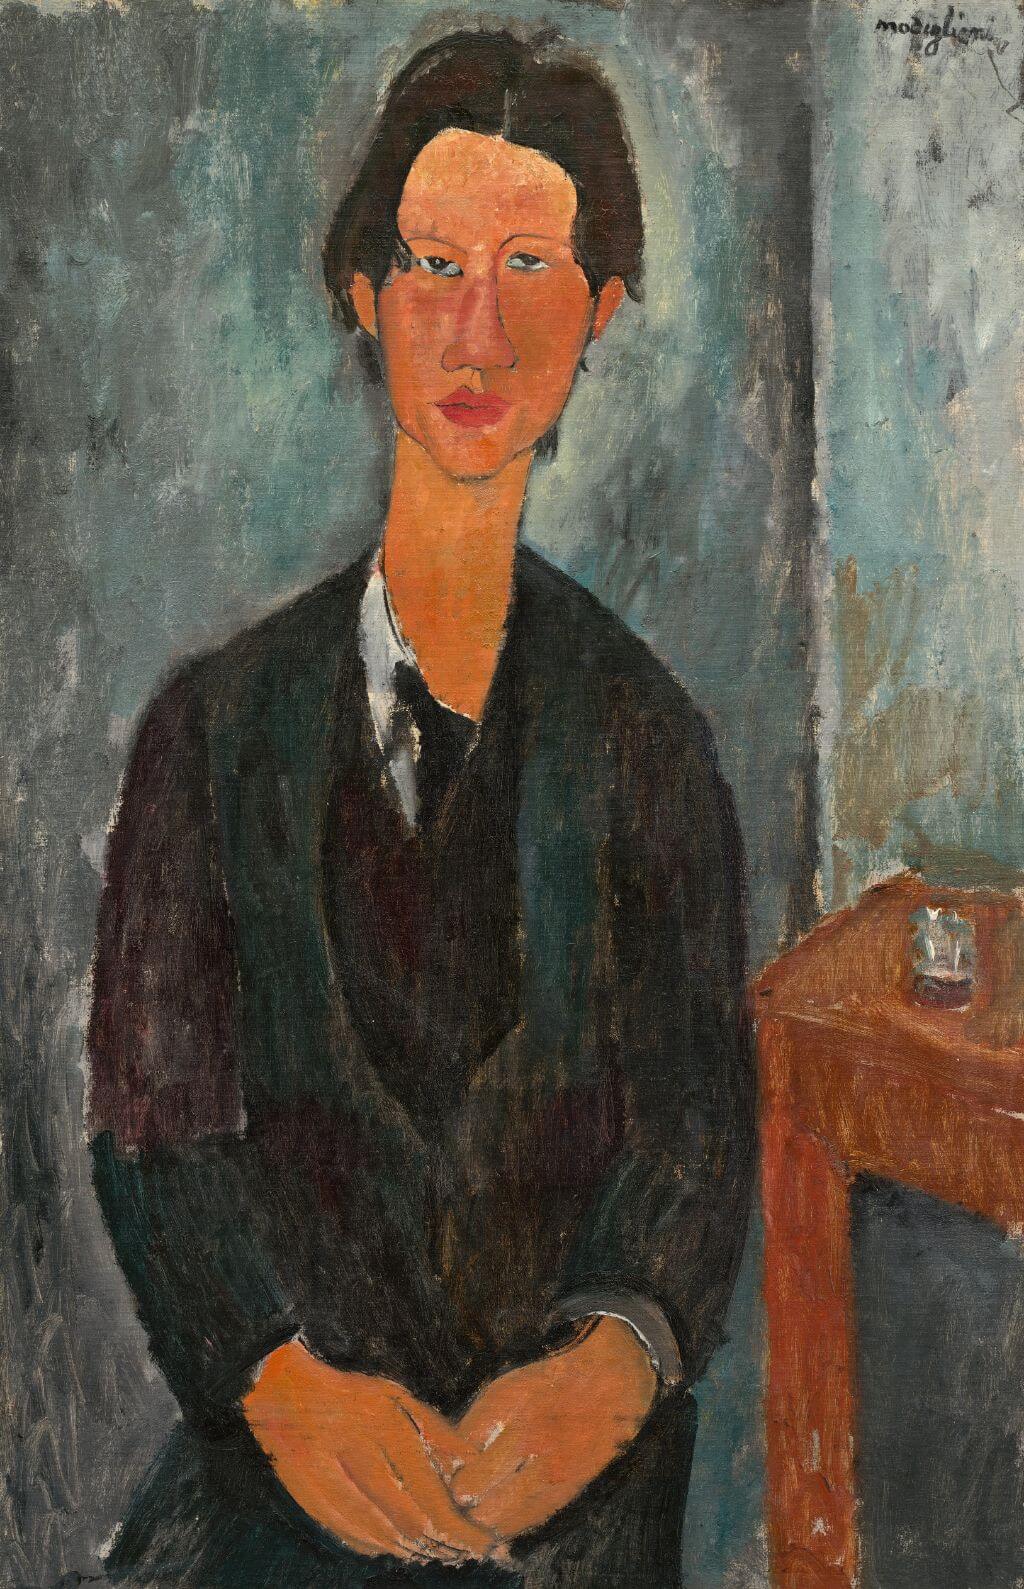 Portrait of Chaim Soutine